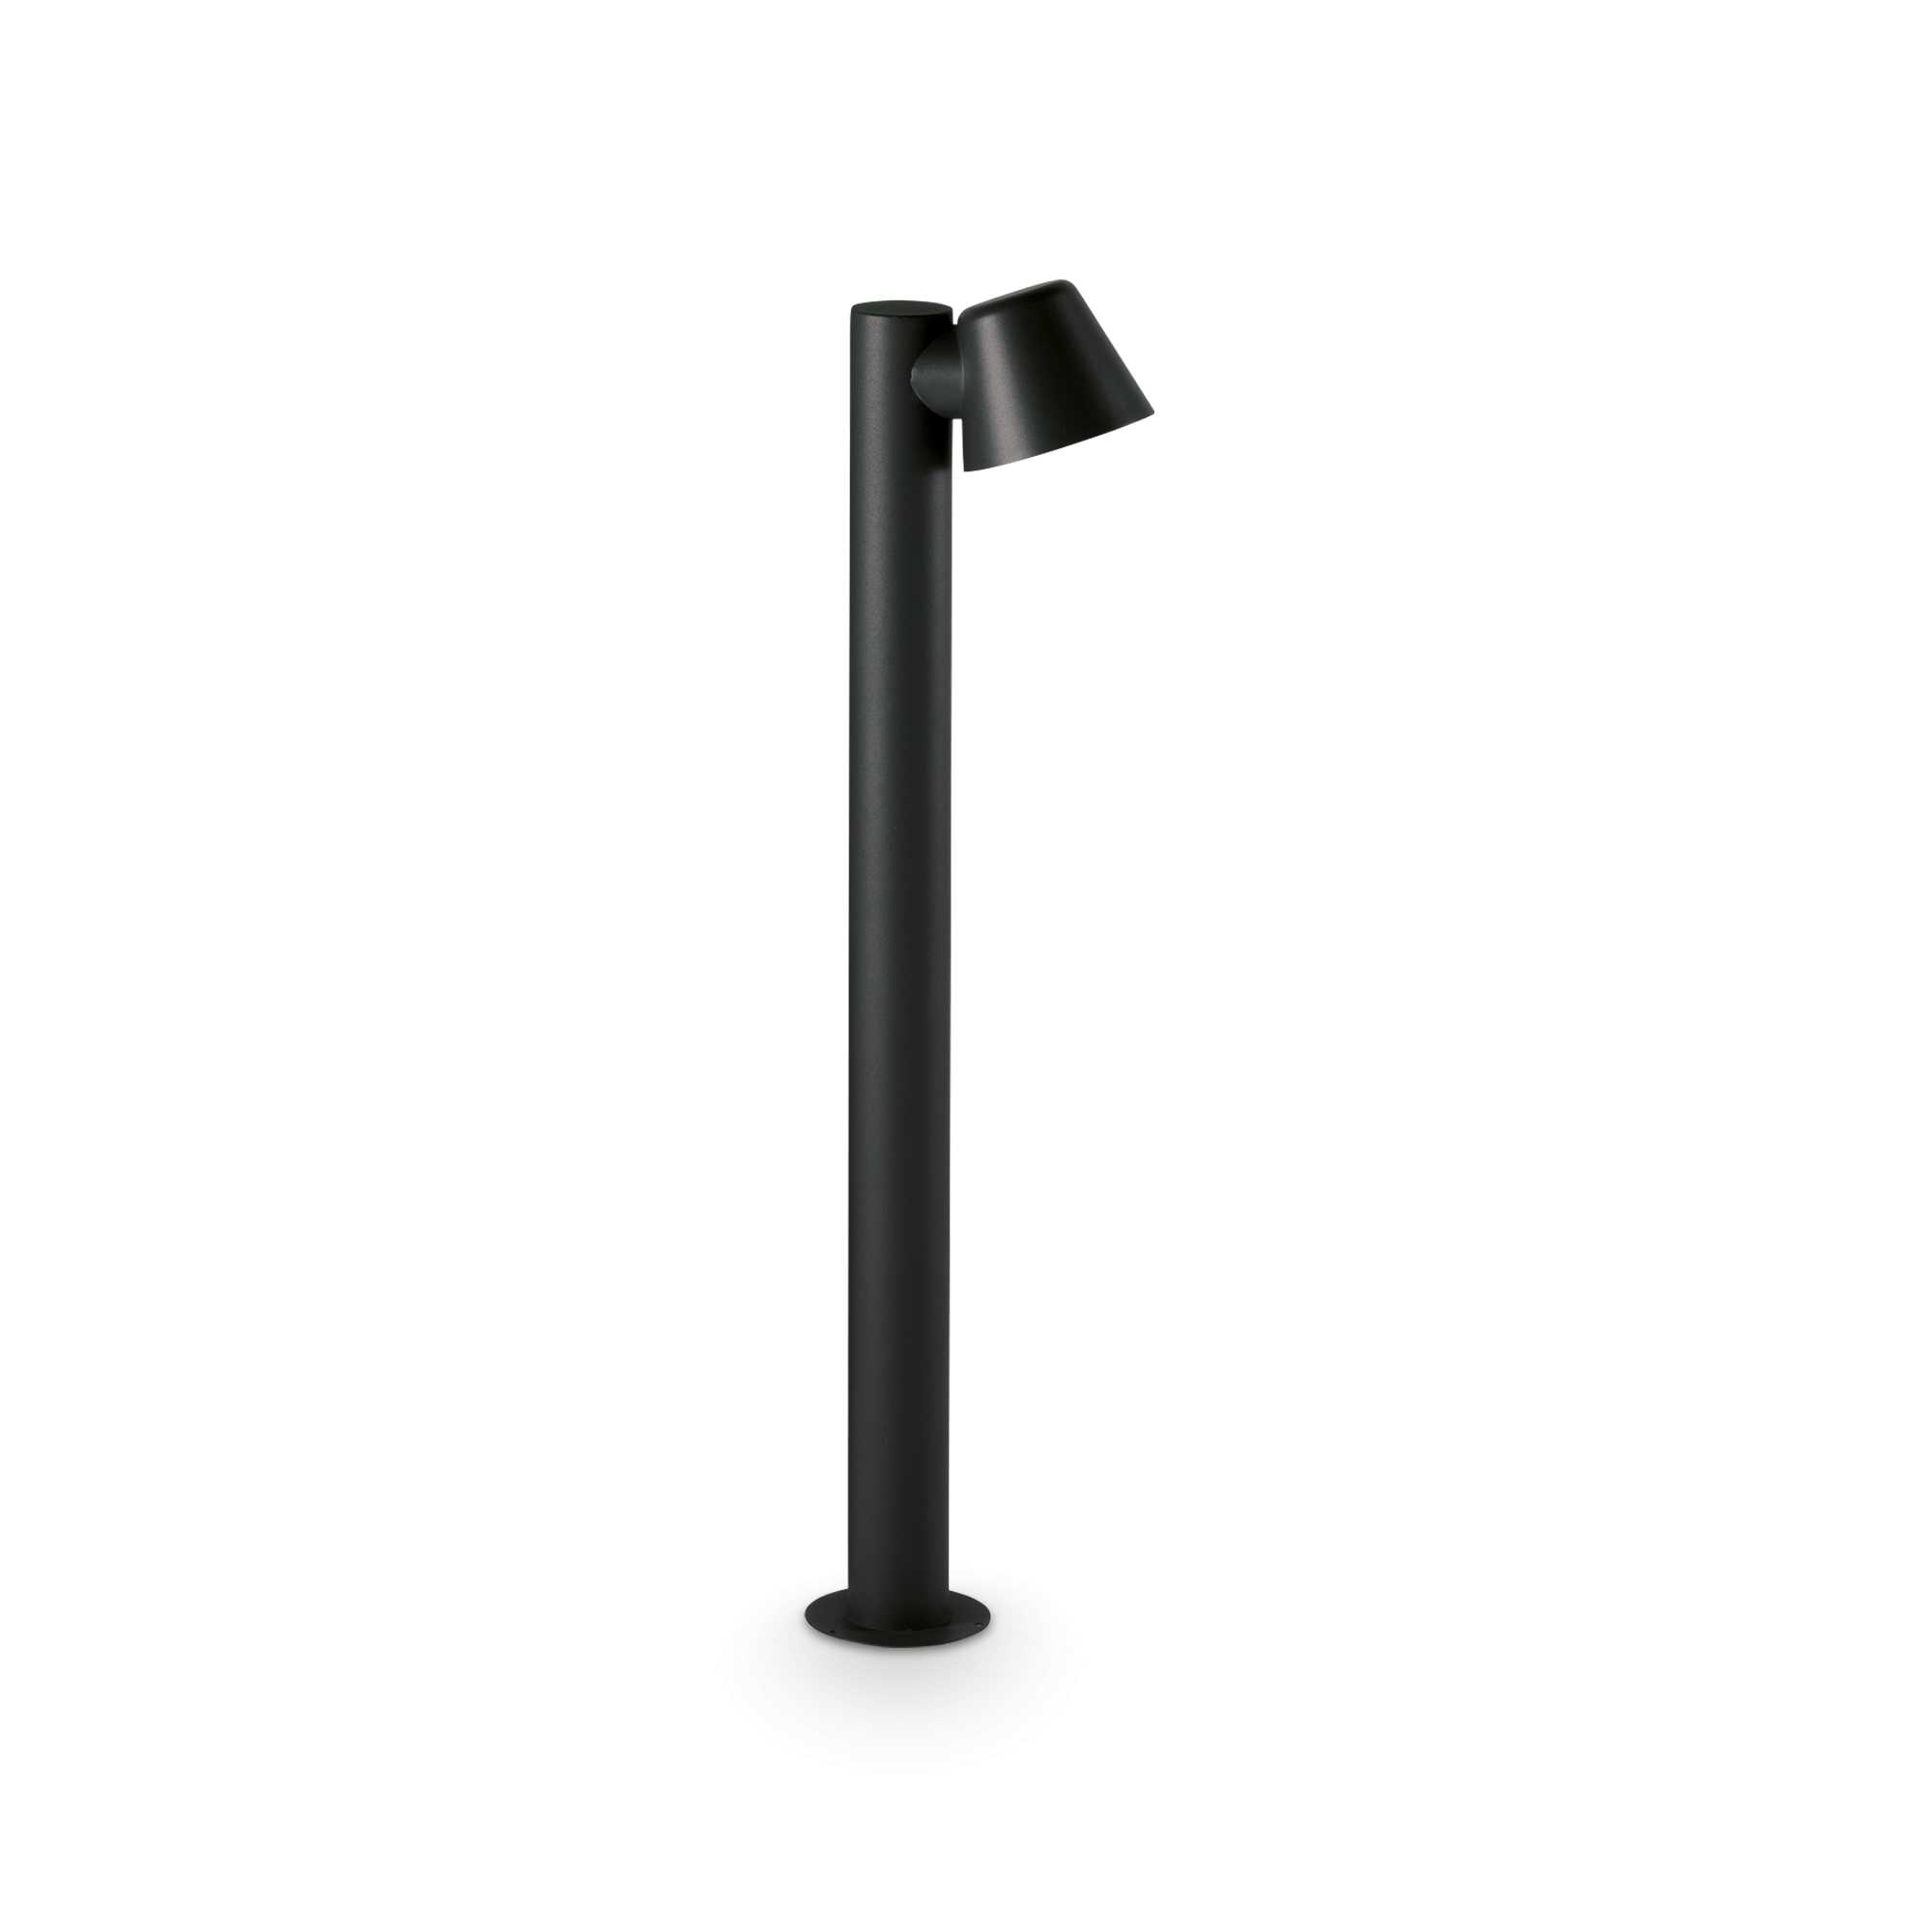 AD hotelska oprema Vanjska podna lampa Gas pt1- Crne boje slika proizvoda